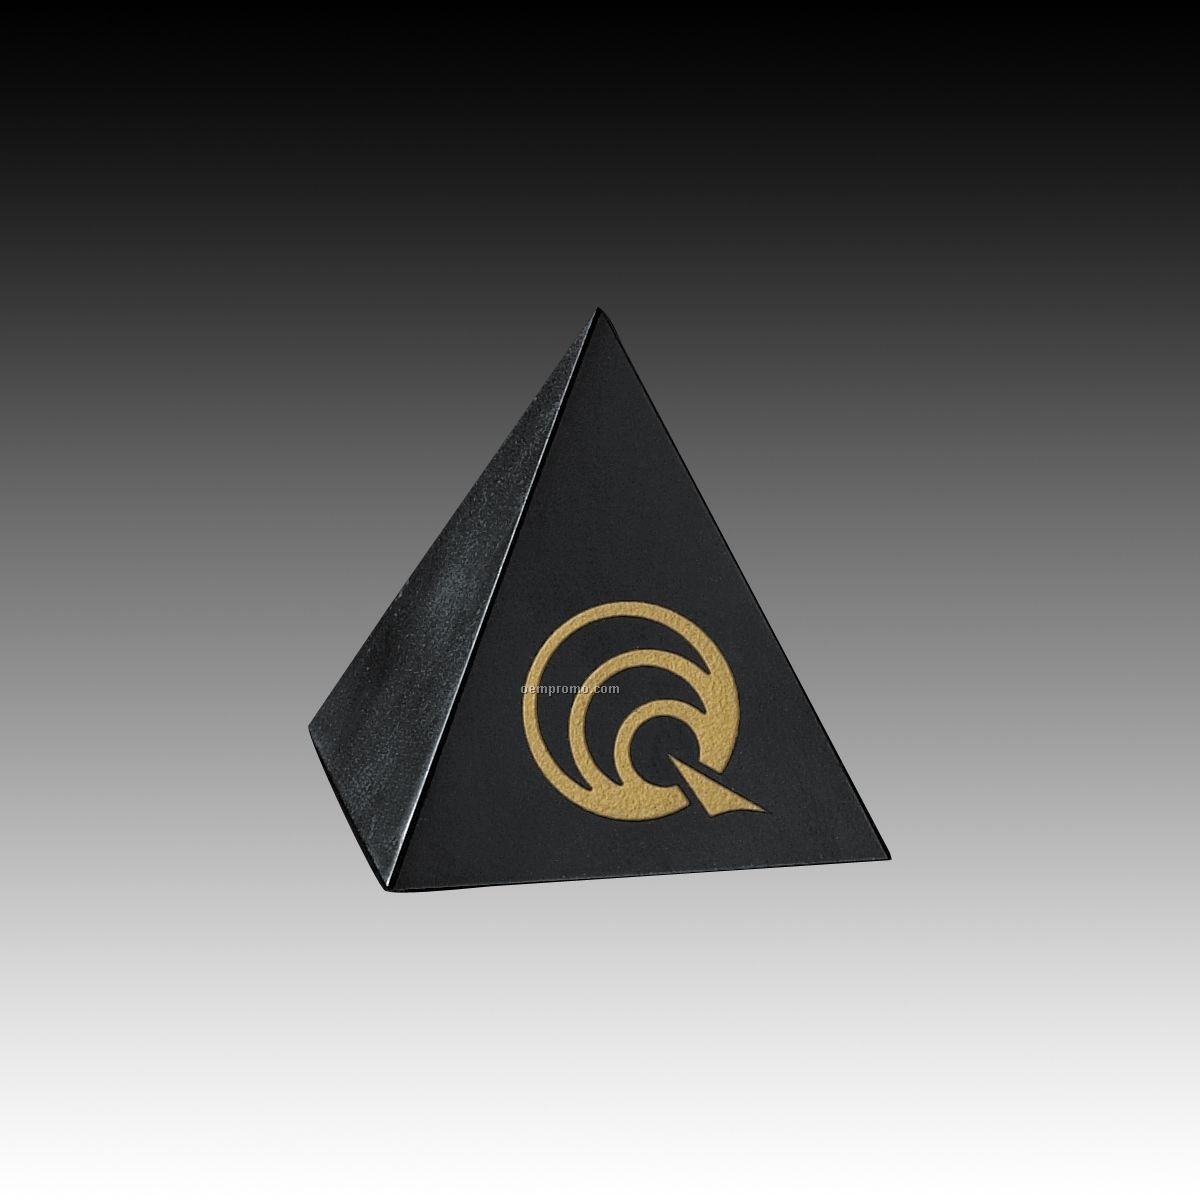 6" Black Genuine Marble Pyramid Award